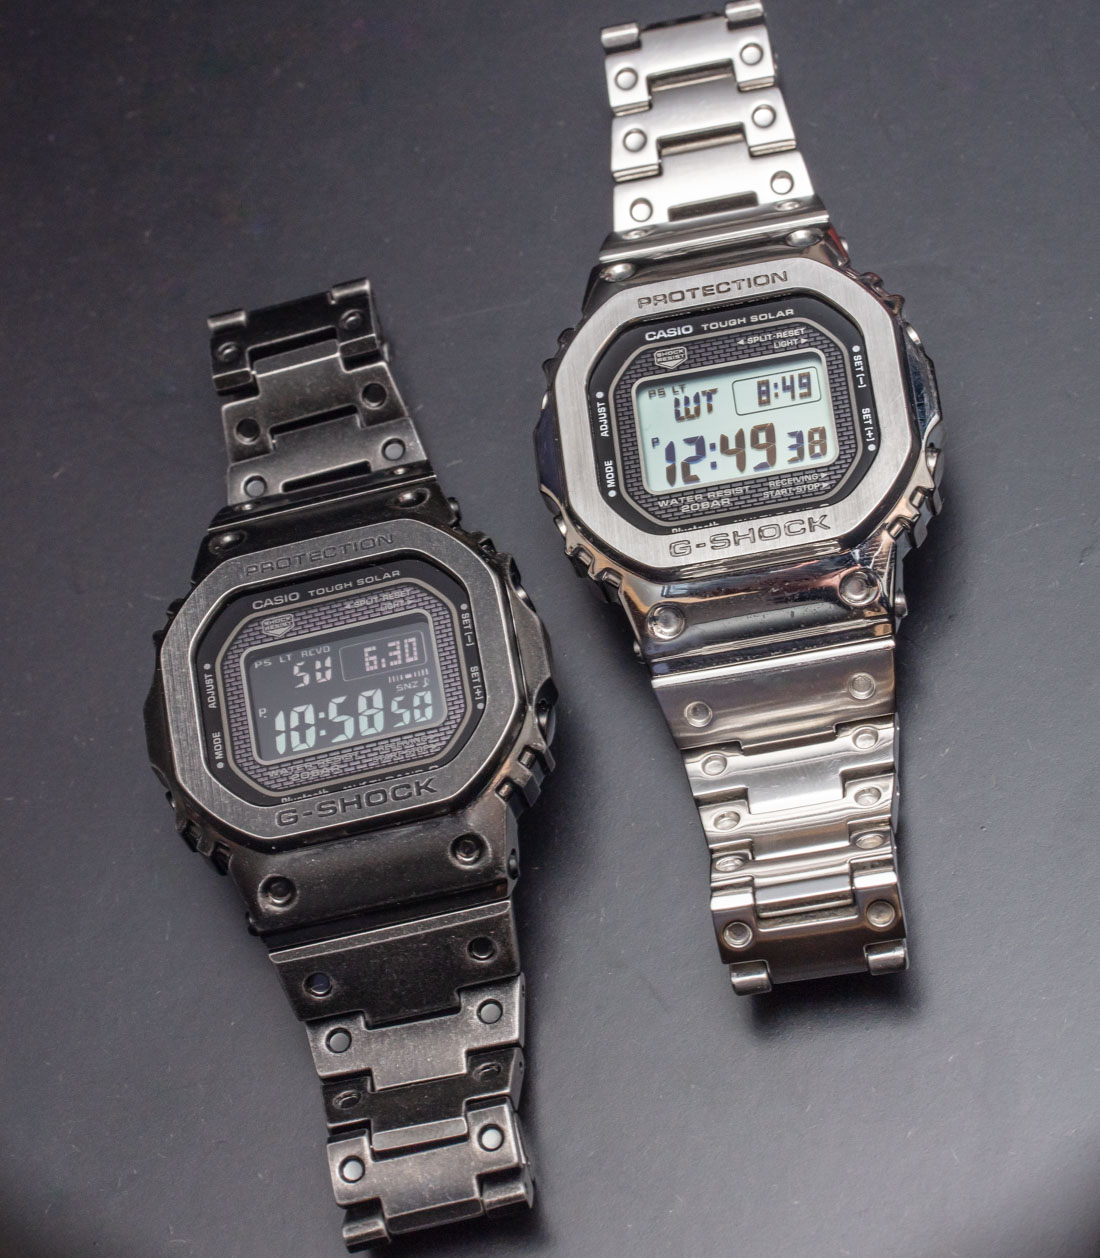 Casio G-Shock GMW-B5000V Aged IP Full-Metal Watch Hands-On 